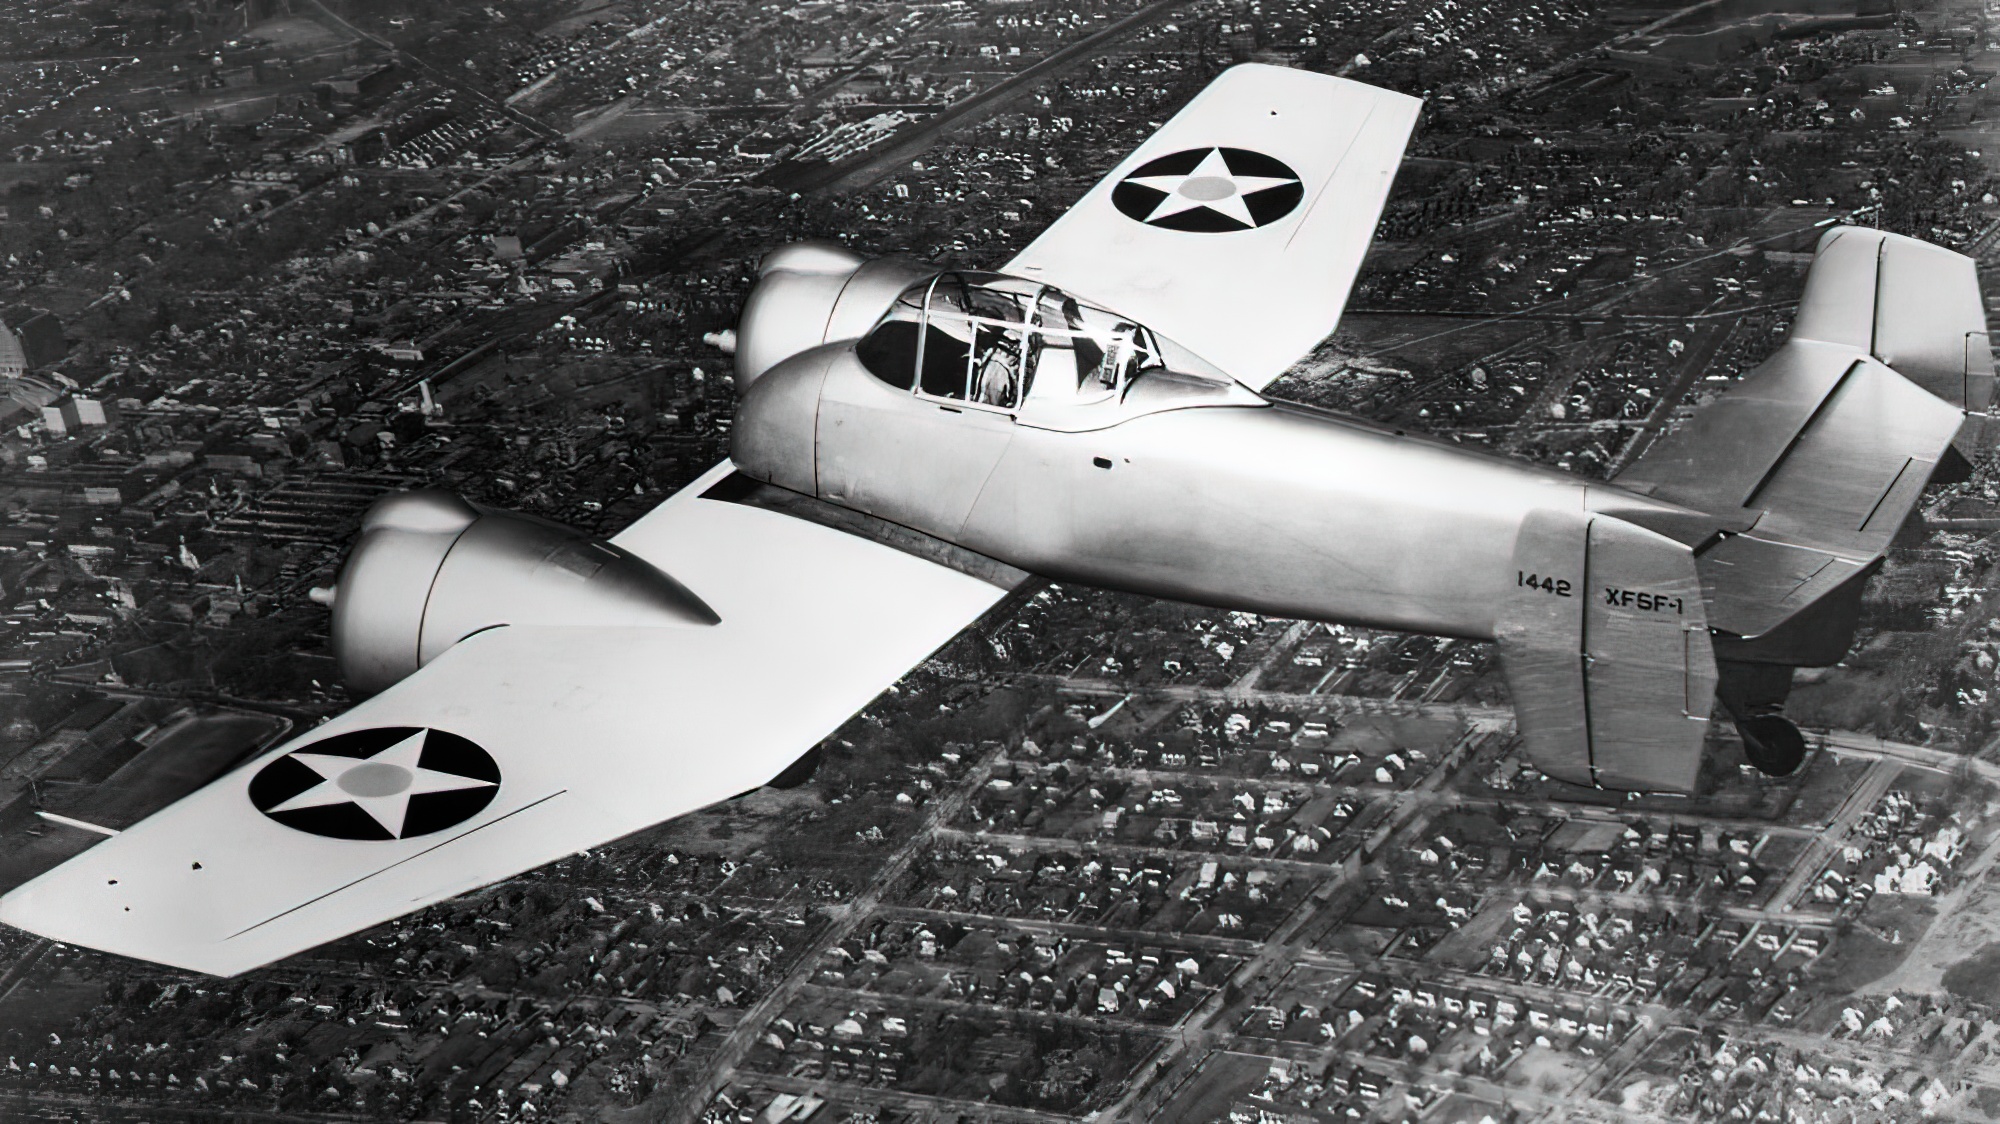 Grumman F5F ‘Skyrocket’ Prototype